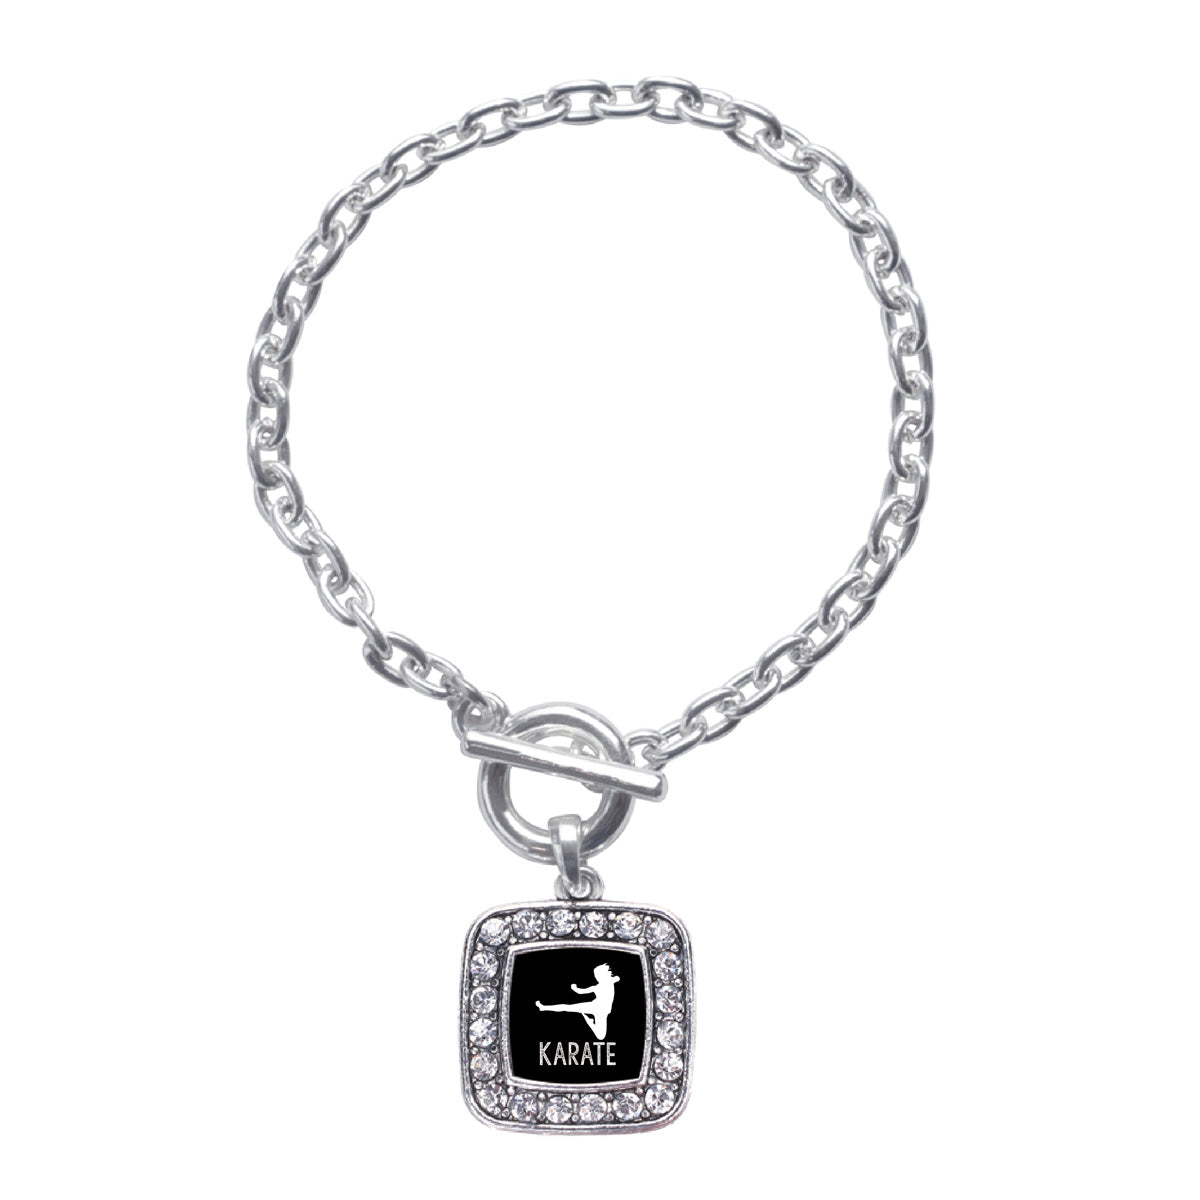 Silver Karate Square Charm Toggle Bracelet